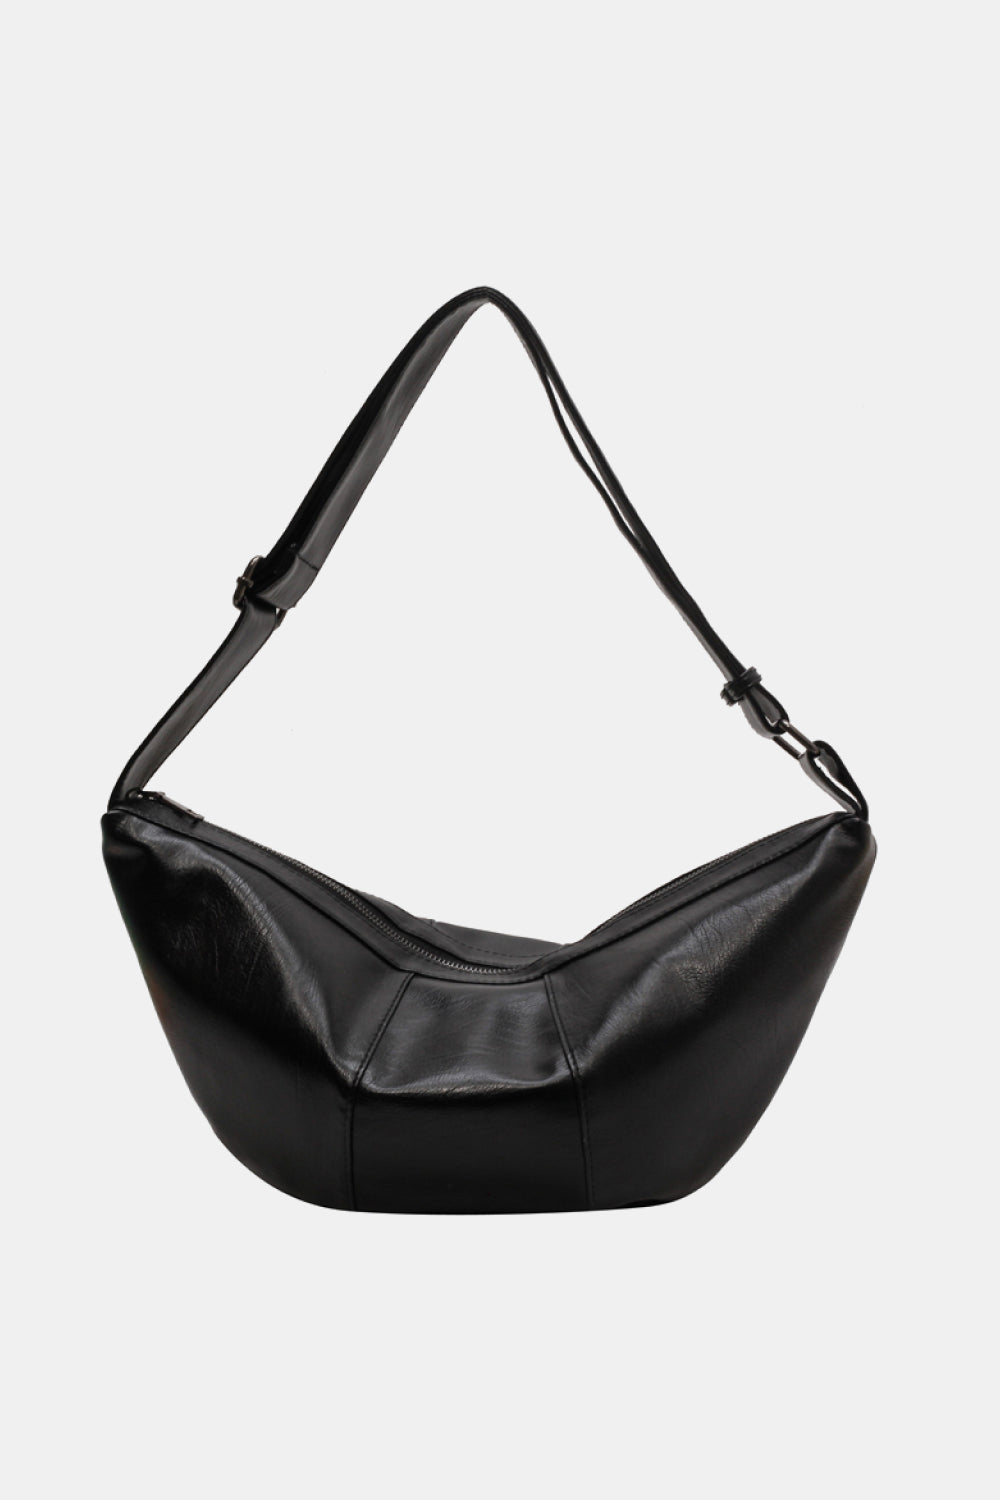 PU Leather Sling Bag - Handbag - FITGGINS